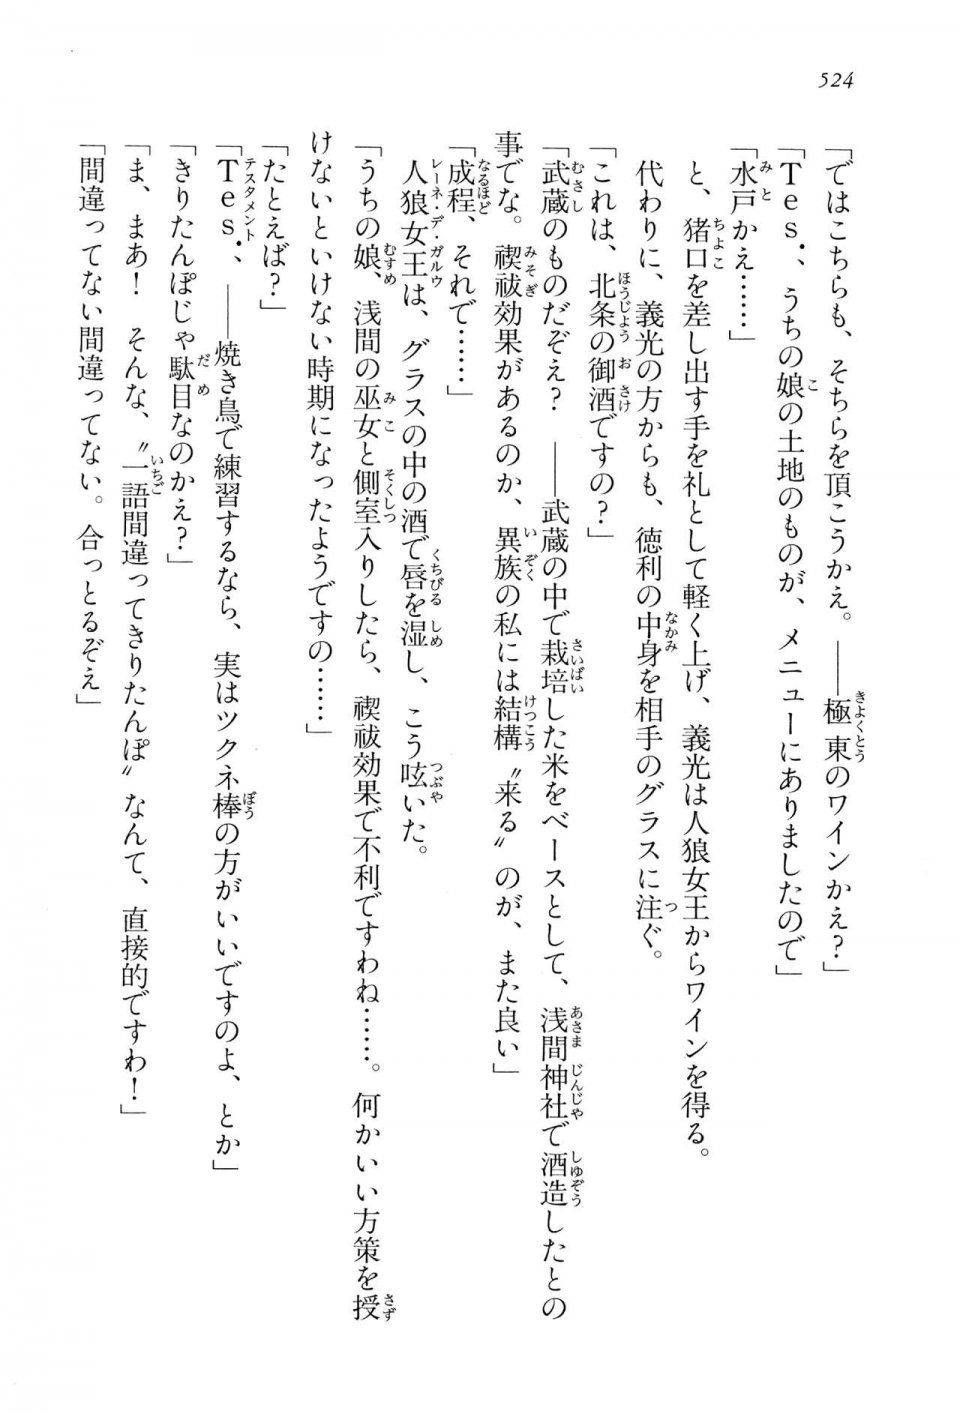 Kyoukai Senjou no Horizon LN Vol 15(6C) Part 1 - Photo #524